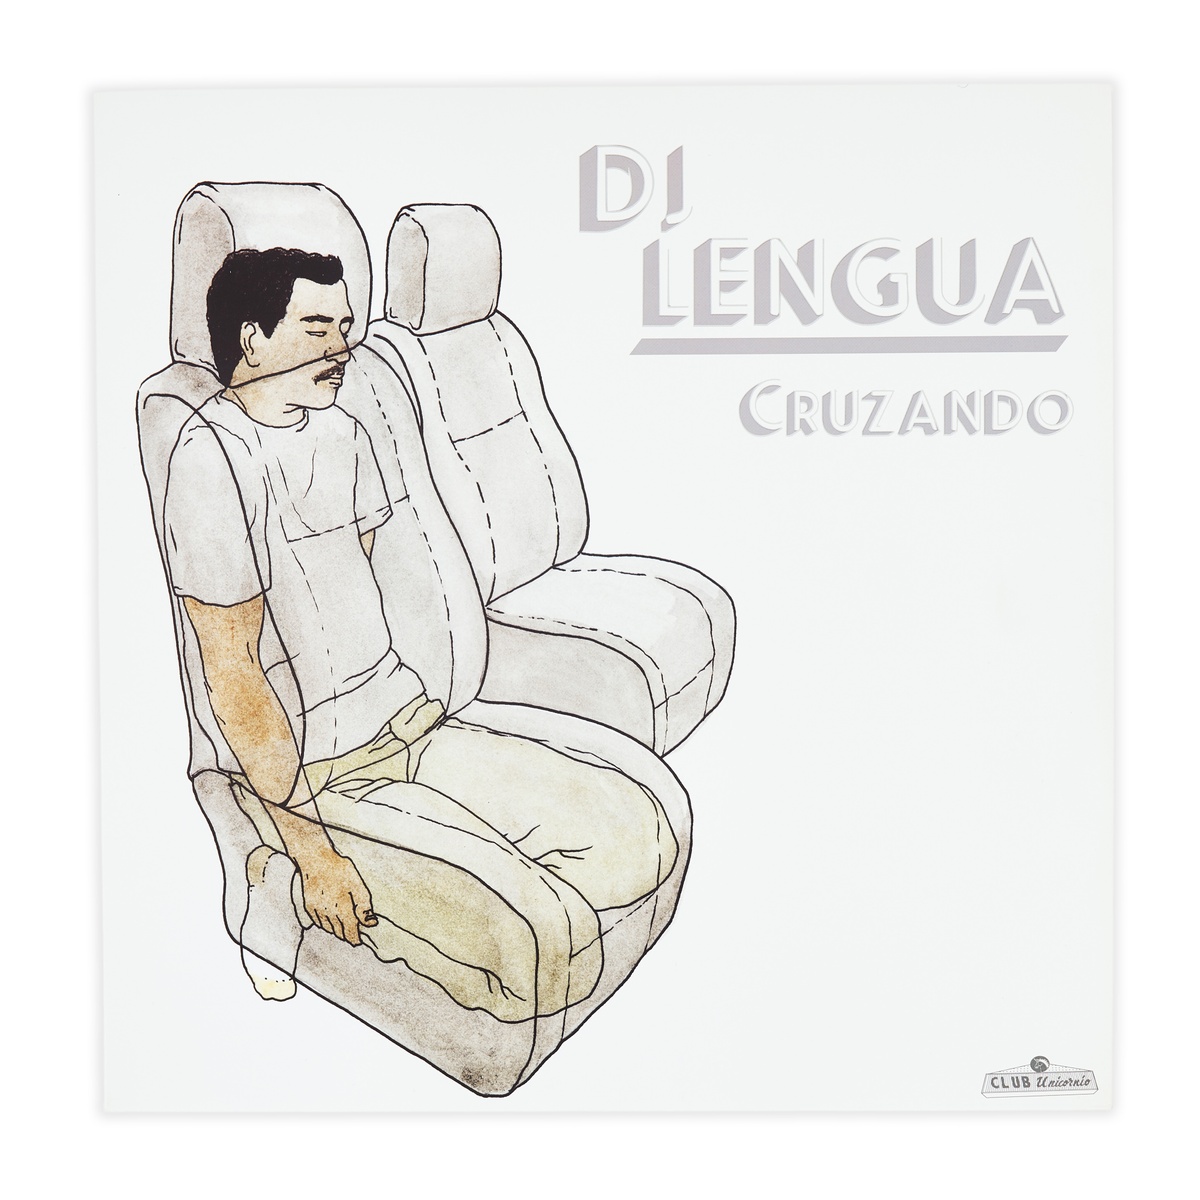 Photograph of the cover of DJ Lengua's 12" vinyl record 'Cruzando'.
